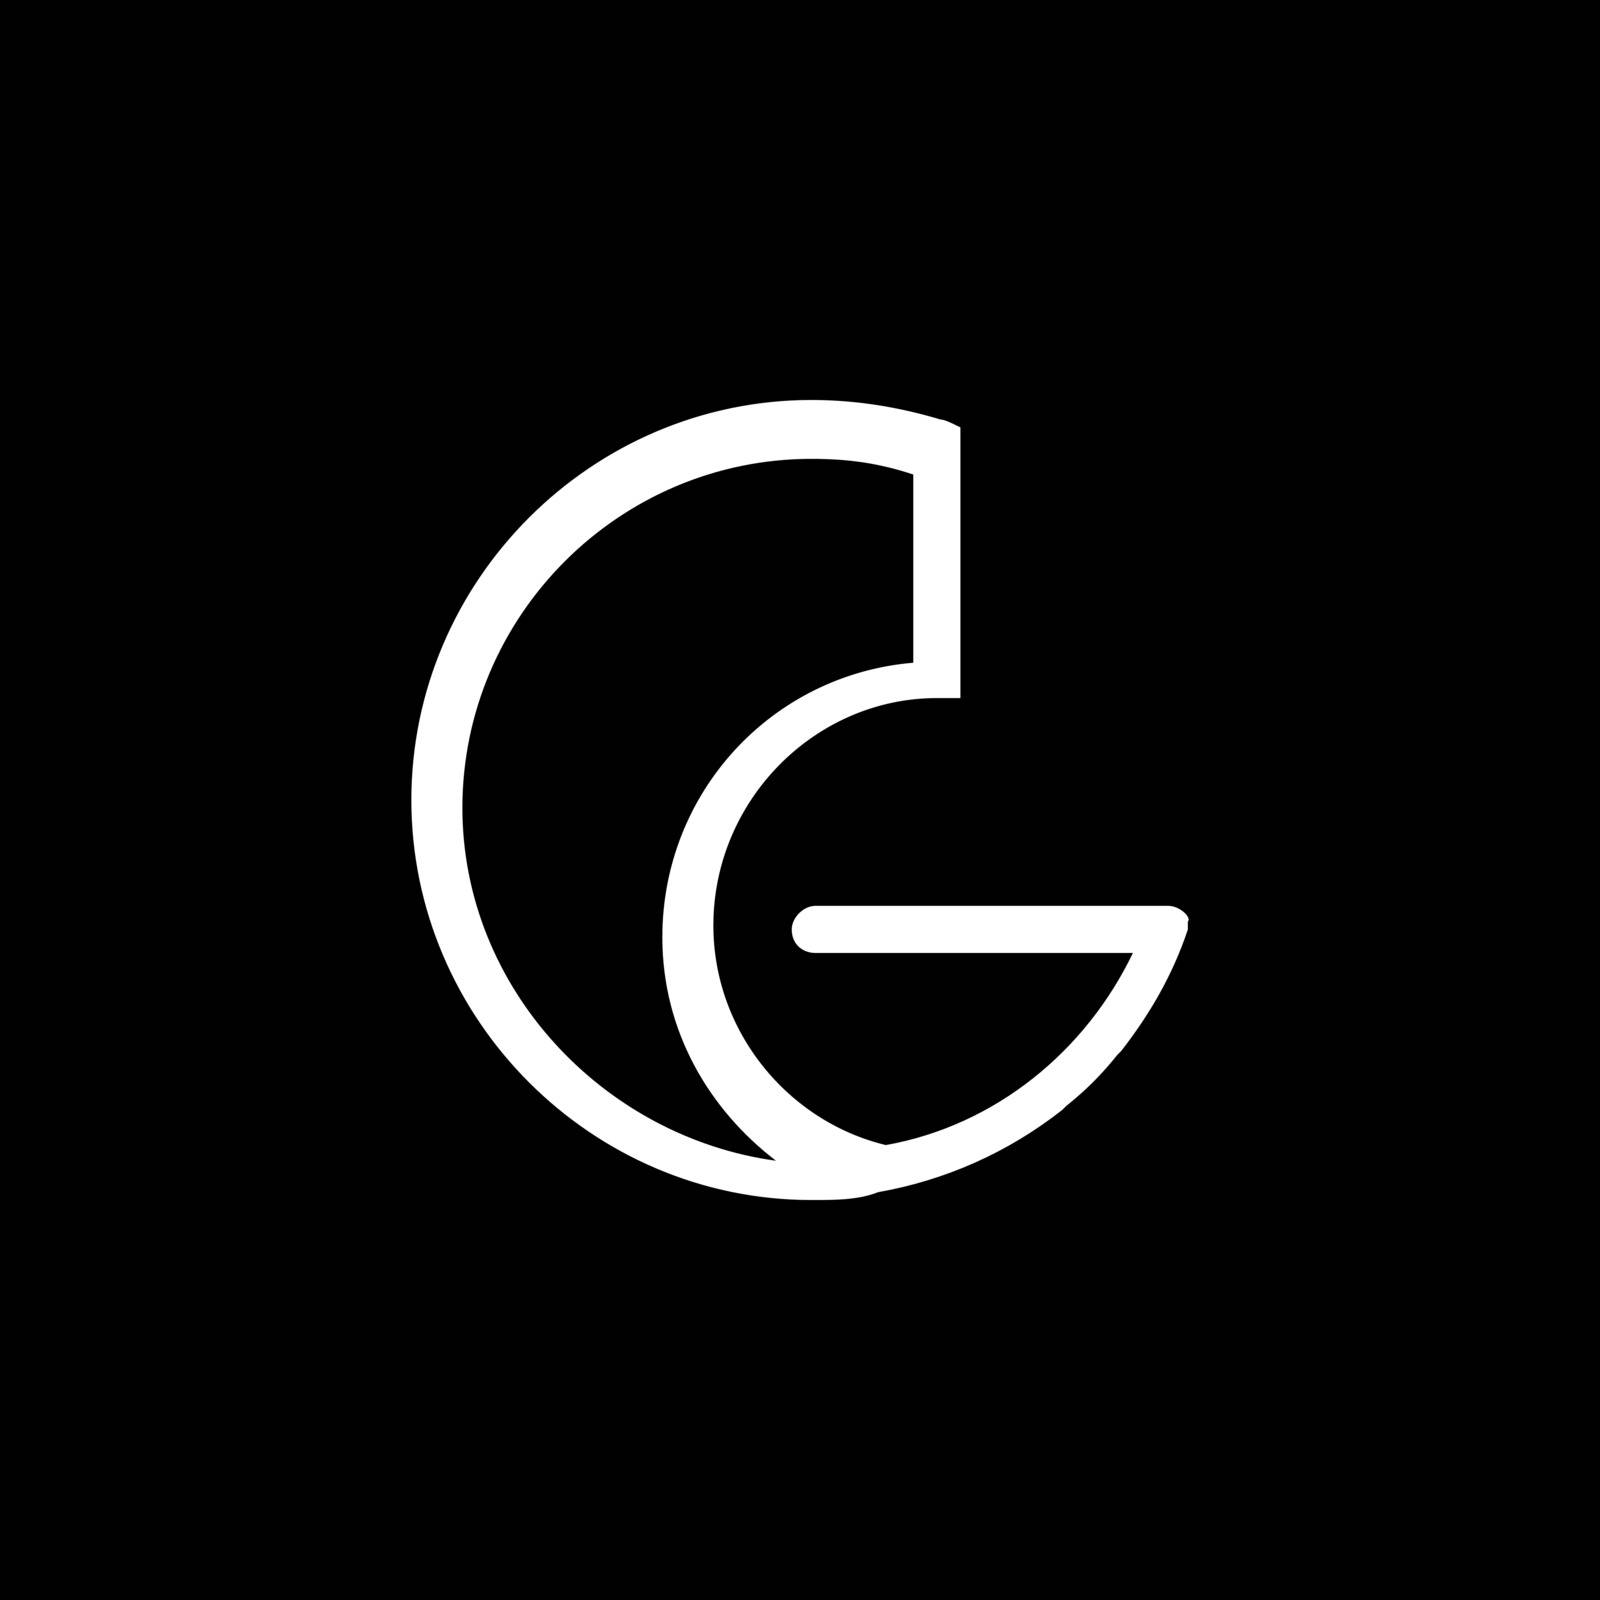 corporate company logo design. letter g logo. flat logo by arsyadee